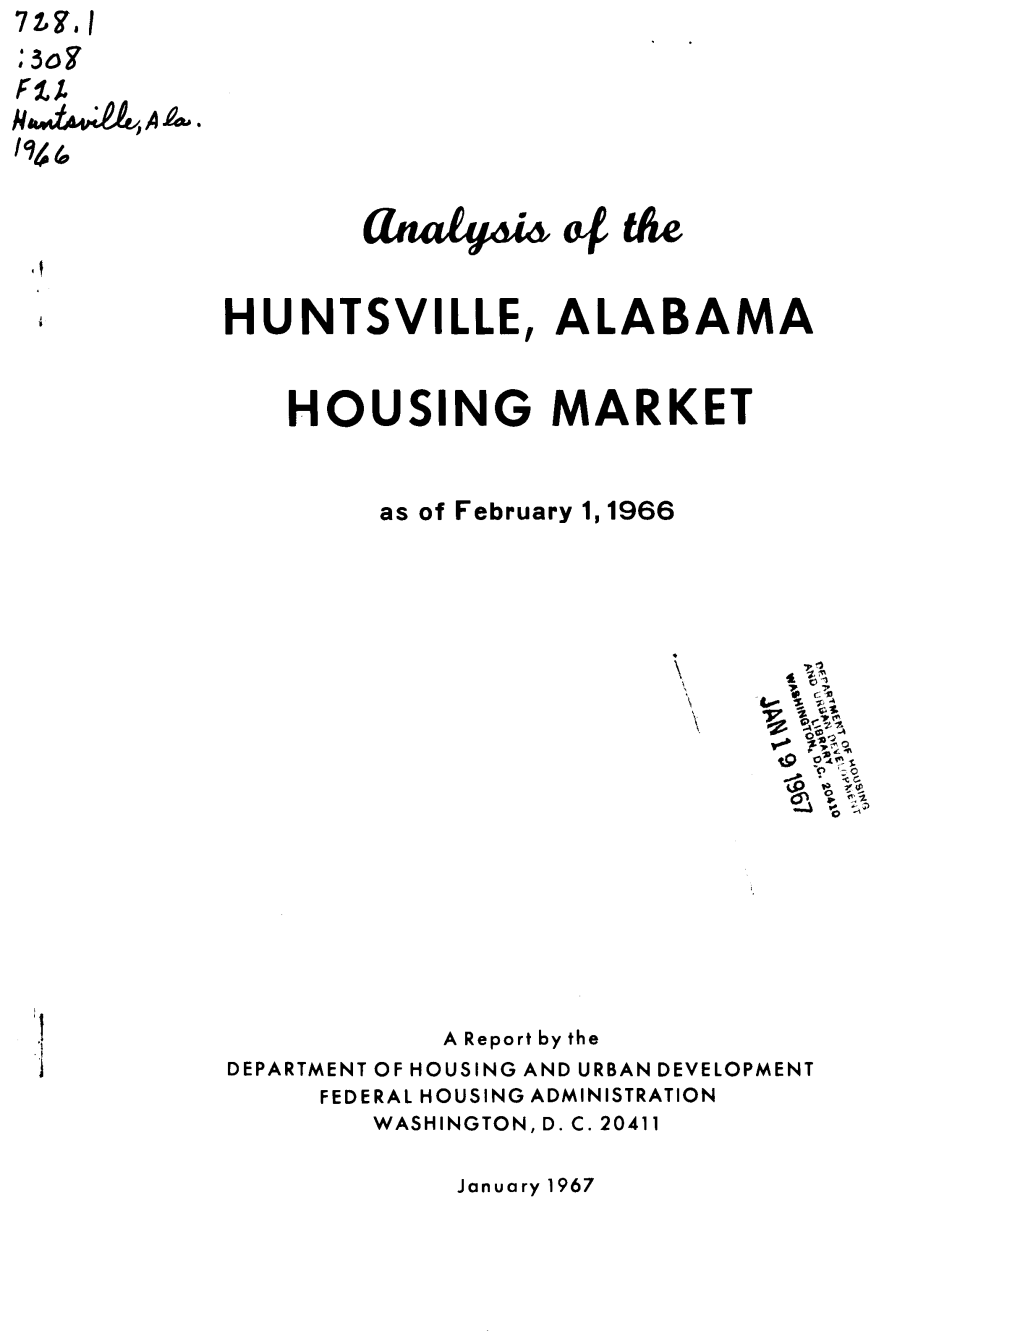 Analysis of the Huntsville, Alabama Housing Market